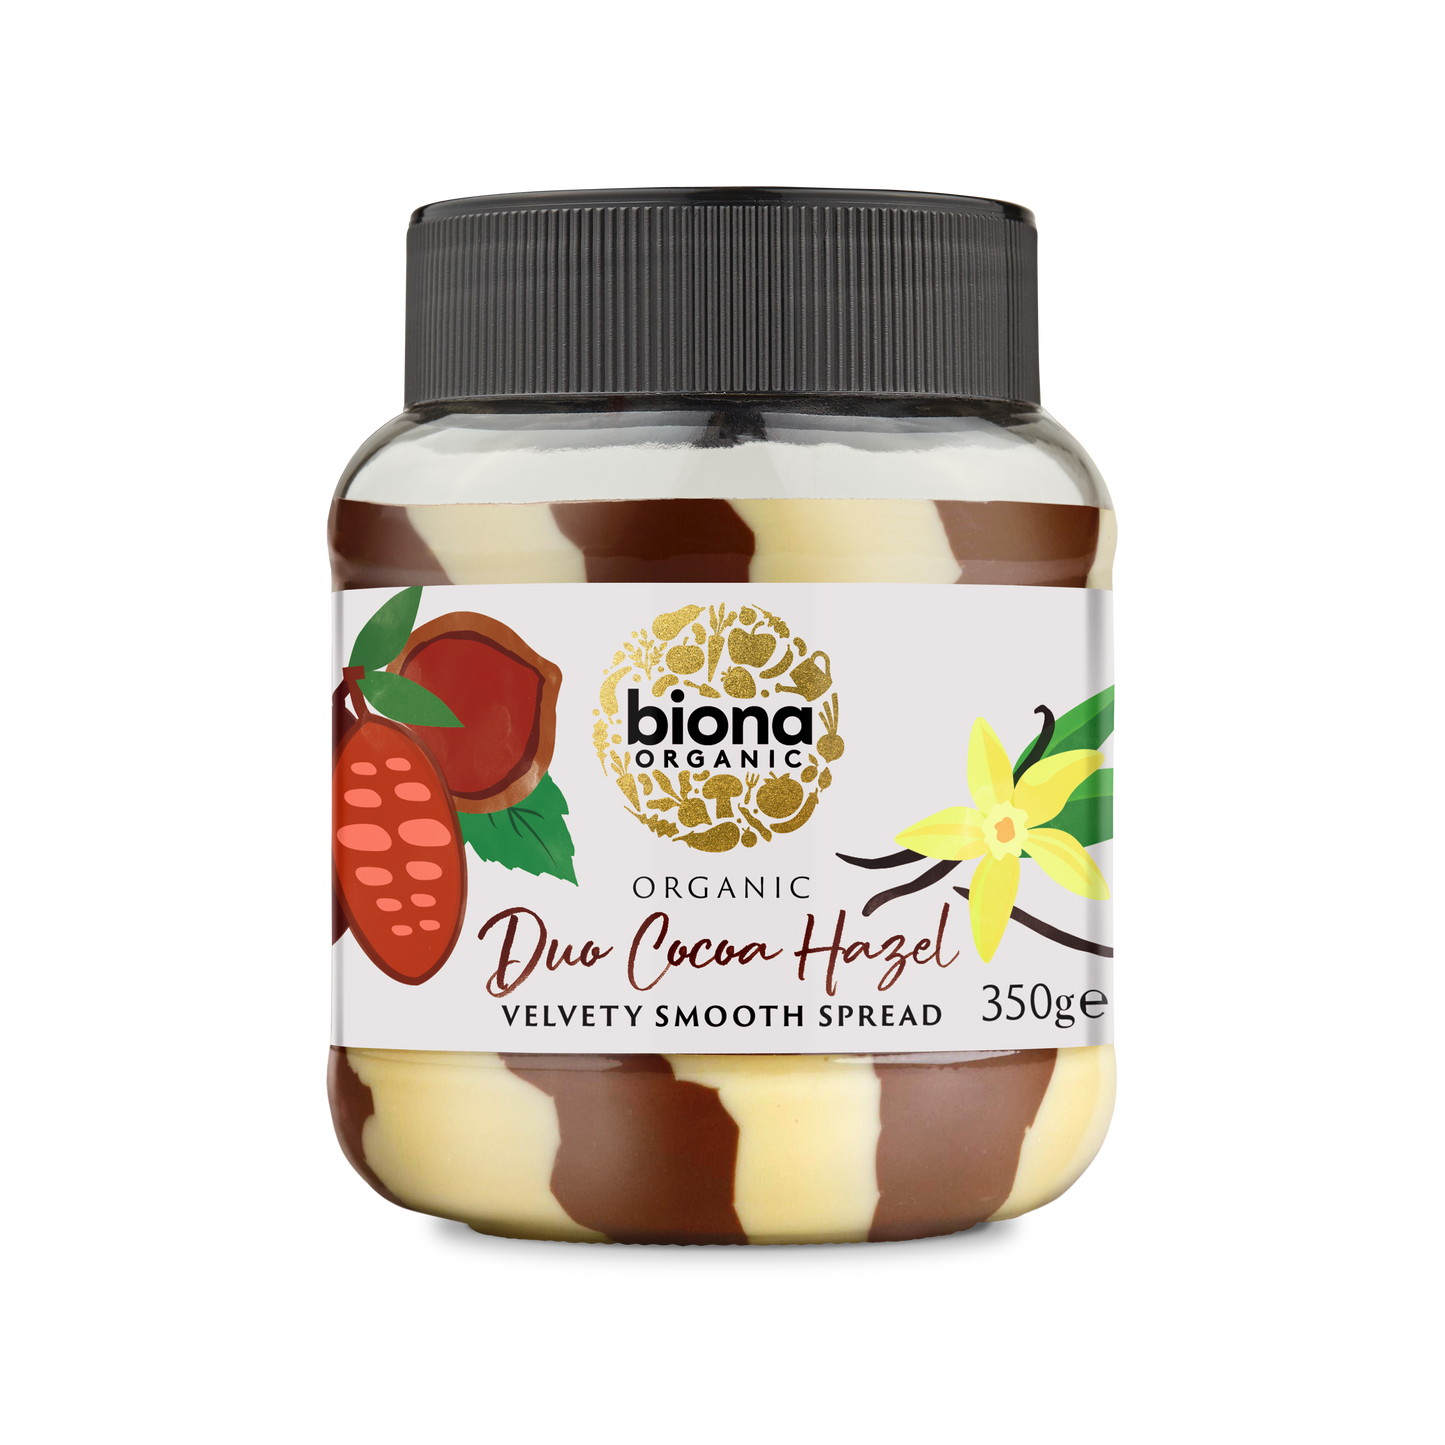 Biona Organic Duo Chocolate Hazelnut Spread 350g Pack of 4